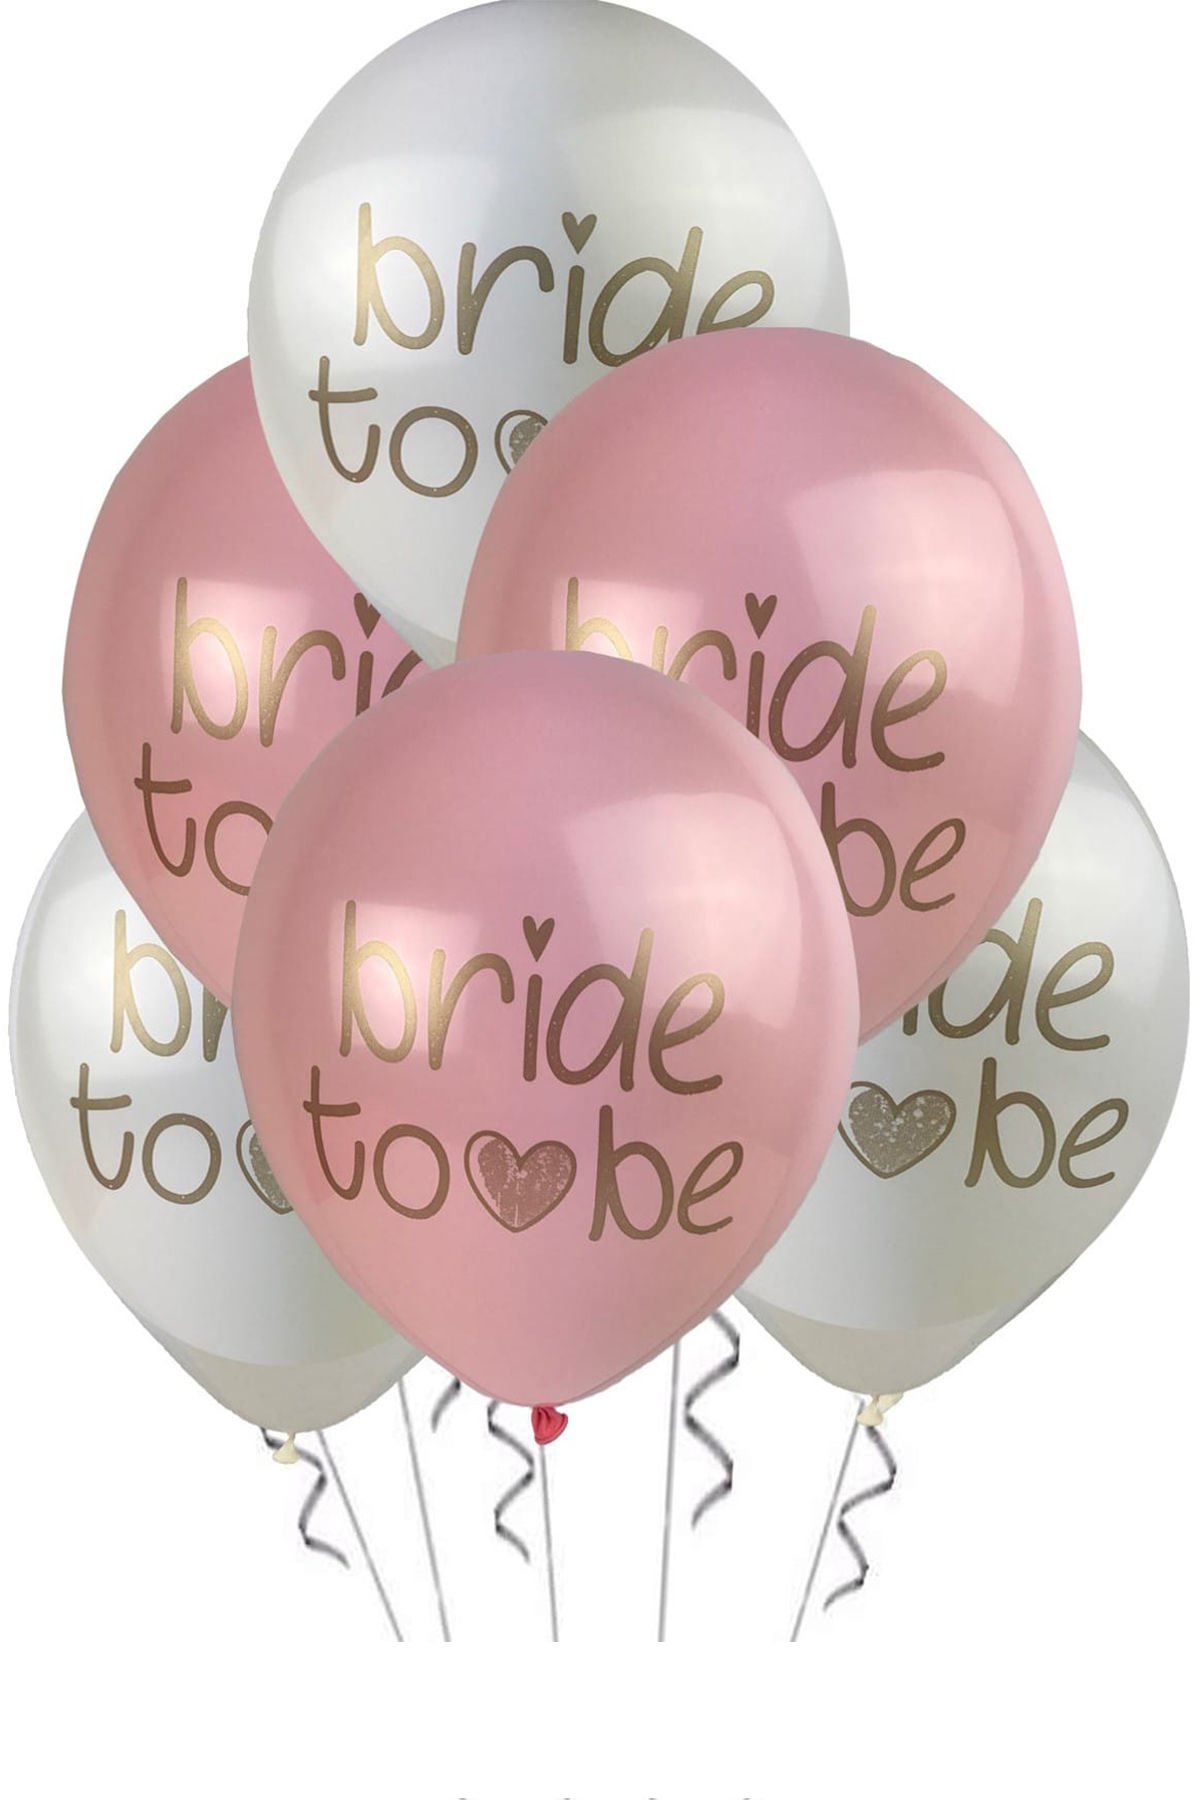 Bride To Be Balonları - Pembe Beyaz 6'lı Paket